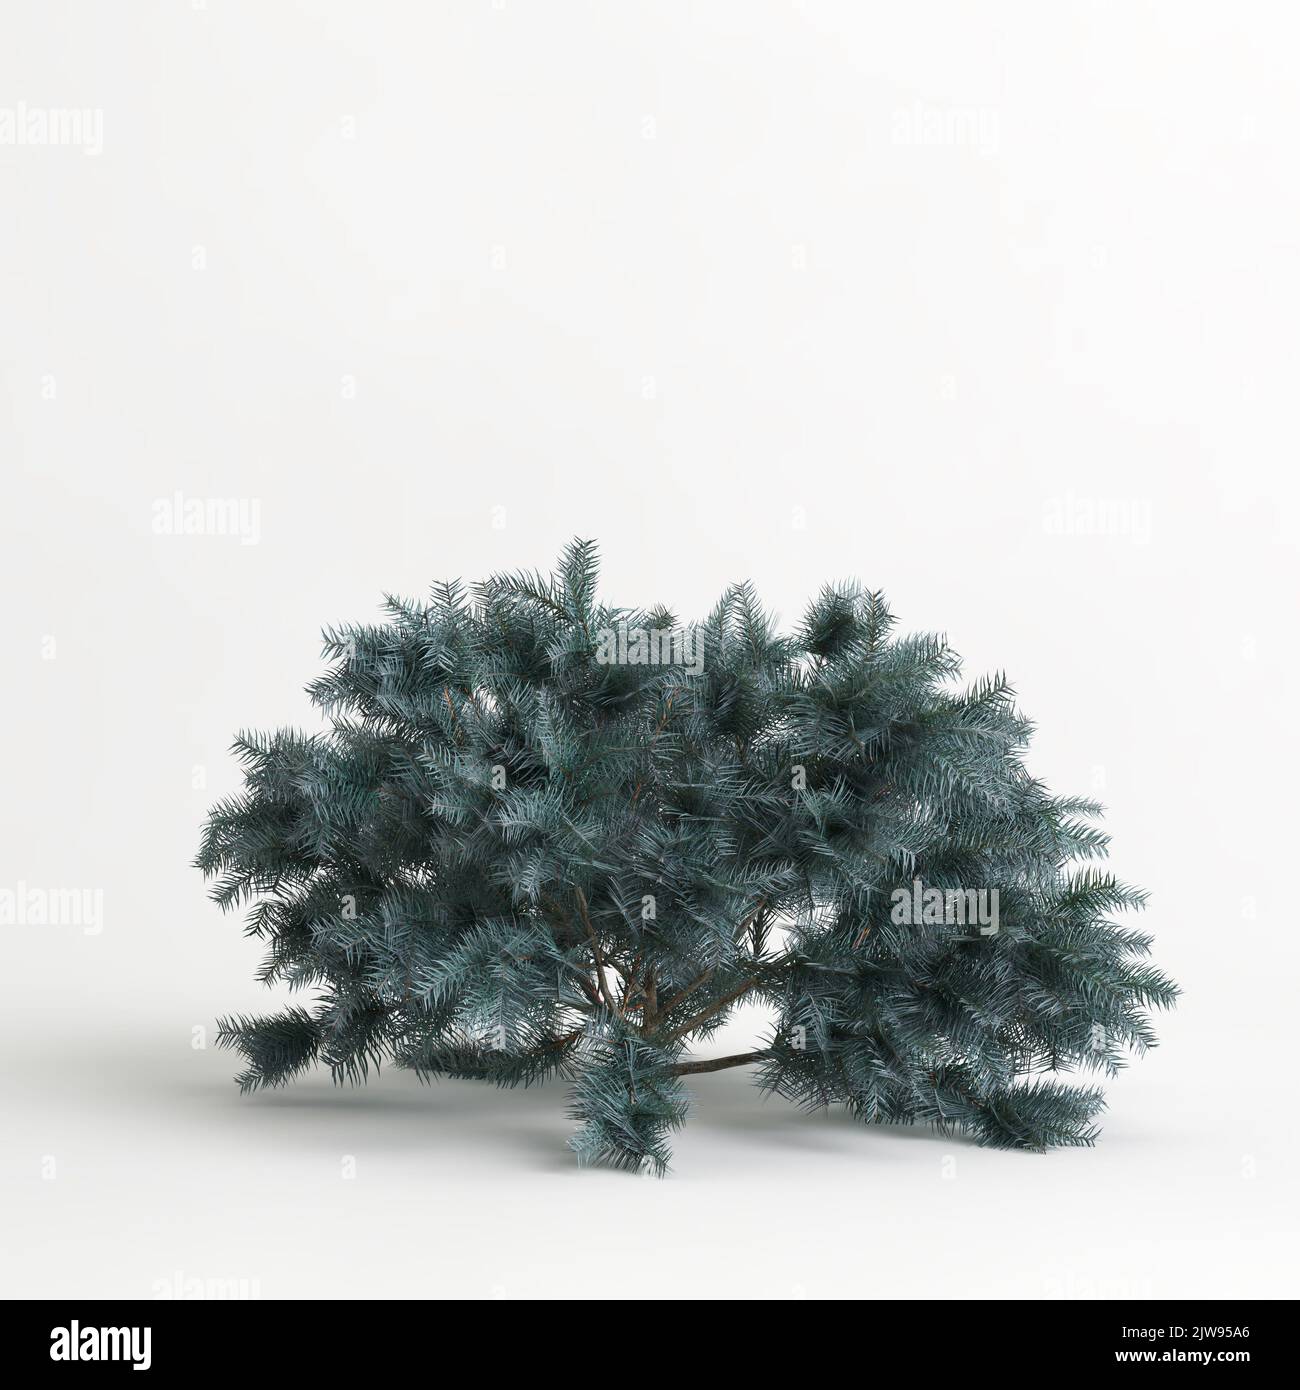 3d illustration of picea pungens glauca globosa tree isolated on white background Stock Photo